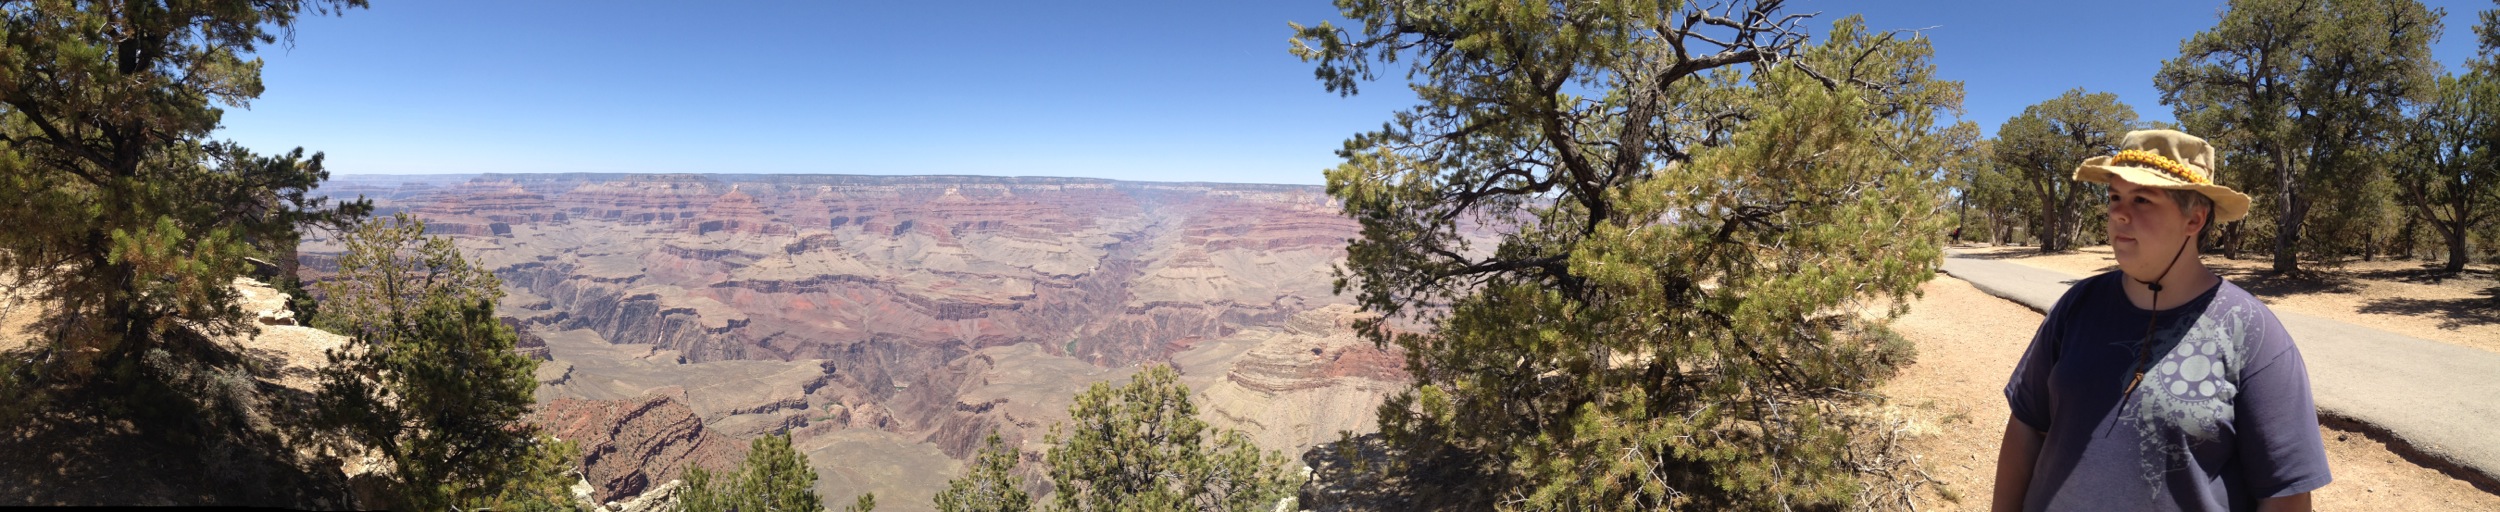 Grand Canyon Pano 2 w/ Dachary